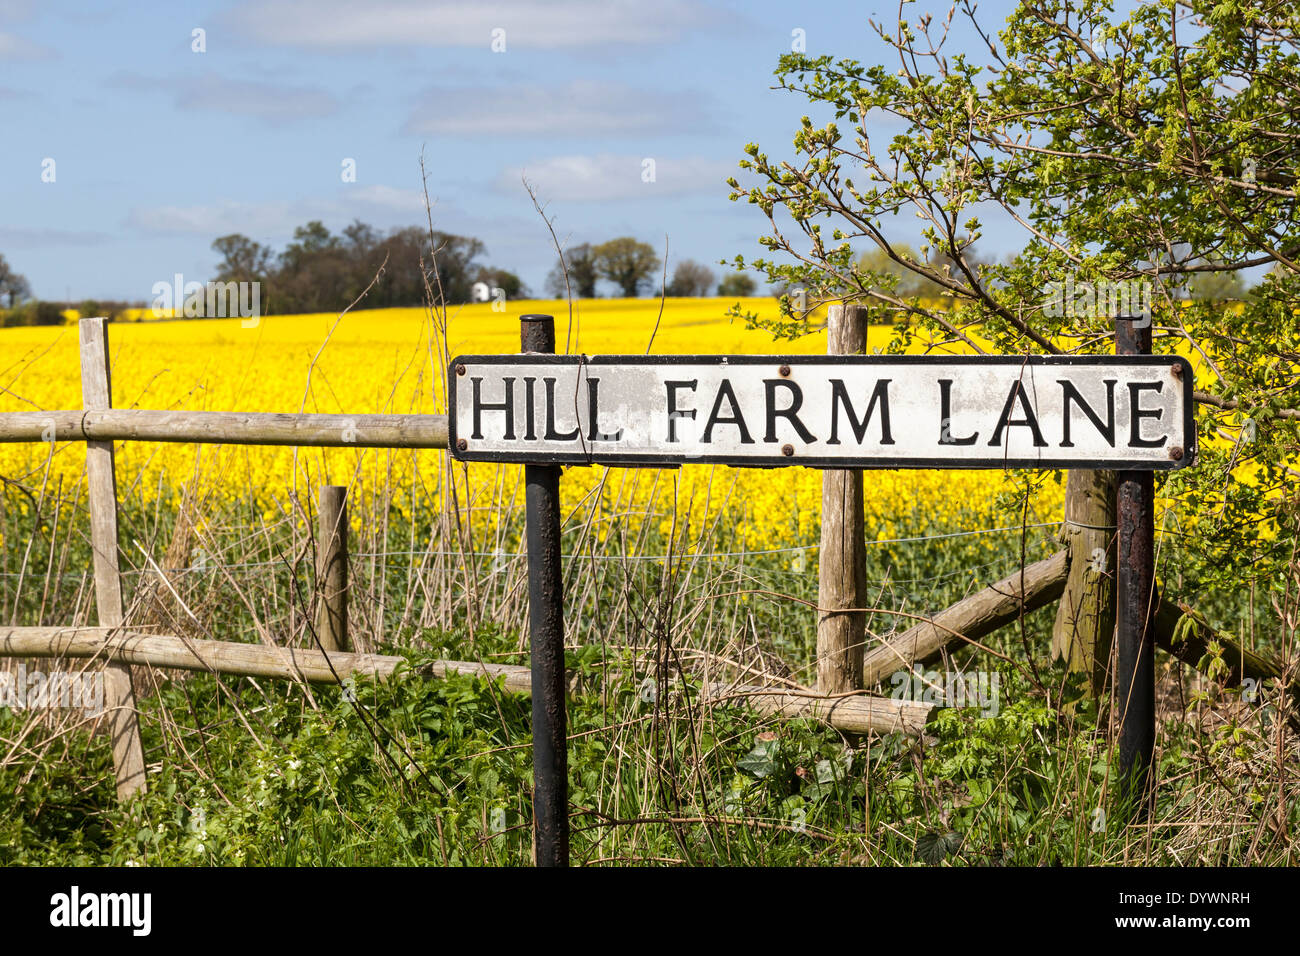 Hill Farm Lane sign, St Albans, Hertfordshire, England, UK. Stock Photo